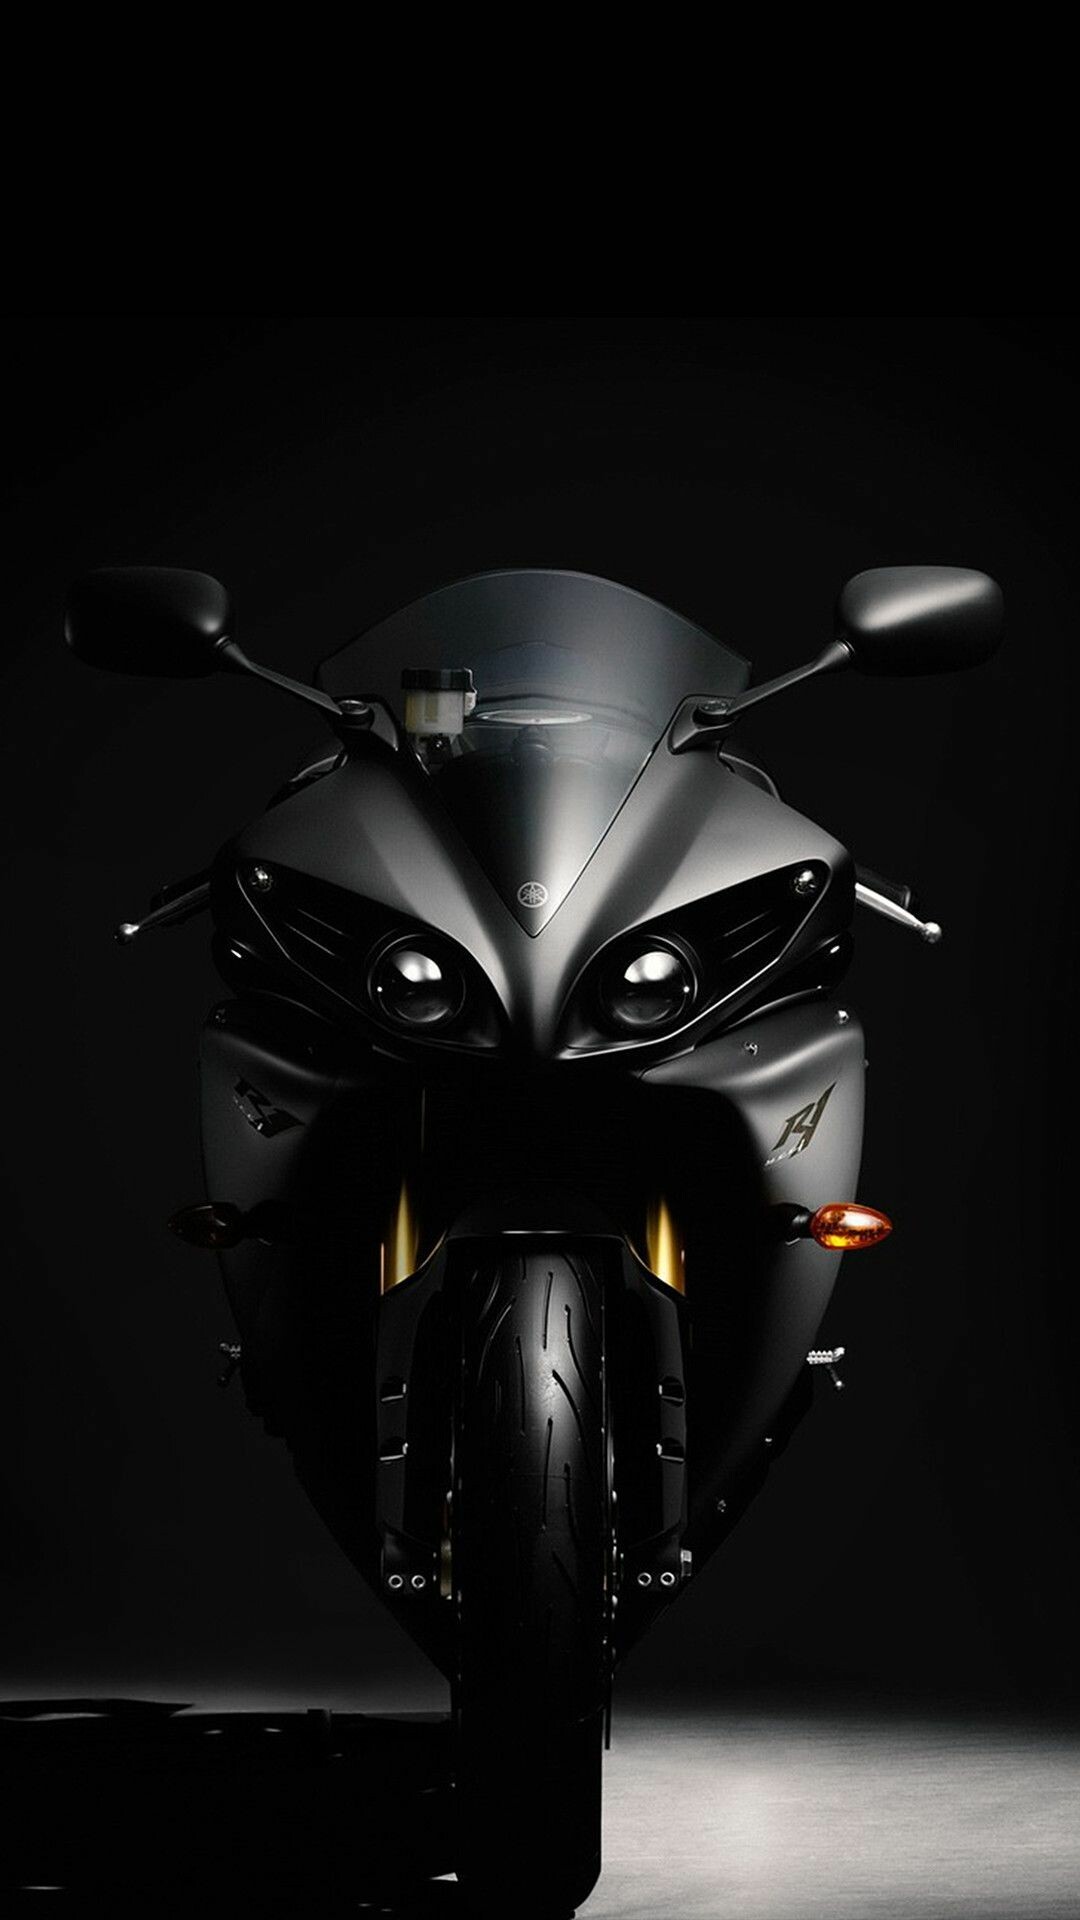 Bike: Yamaha YZF-R1, A 1,000 cc (61 cu in)-class sports motorcycle. 1080x1920 Full HD Wallpaper.